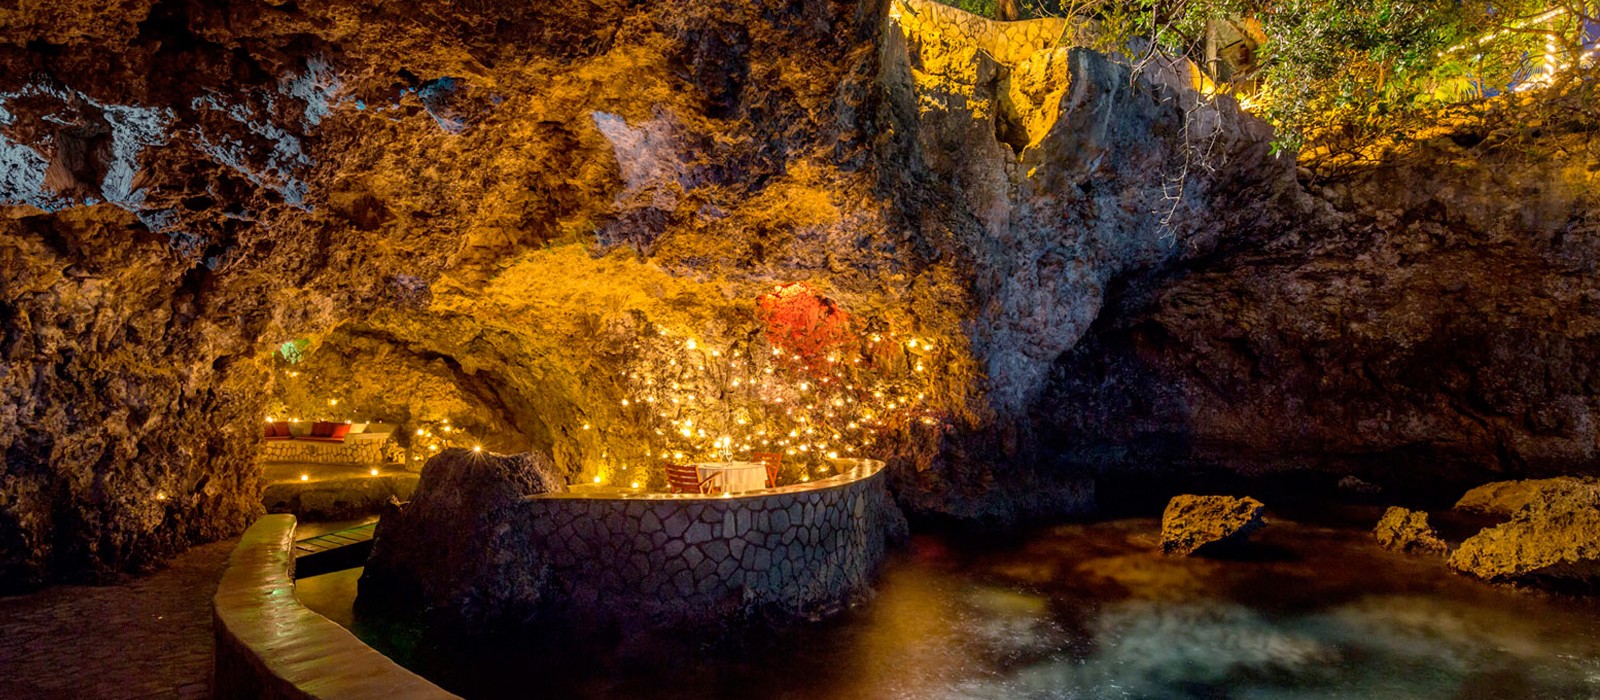 header - the caves jamaica - luxury caribbean holidays